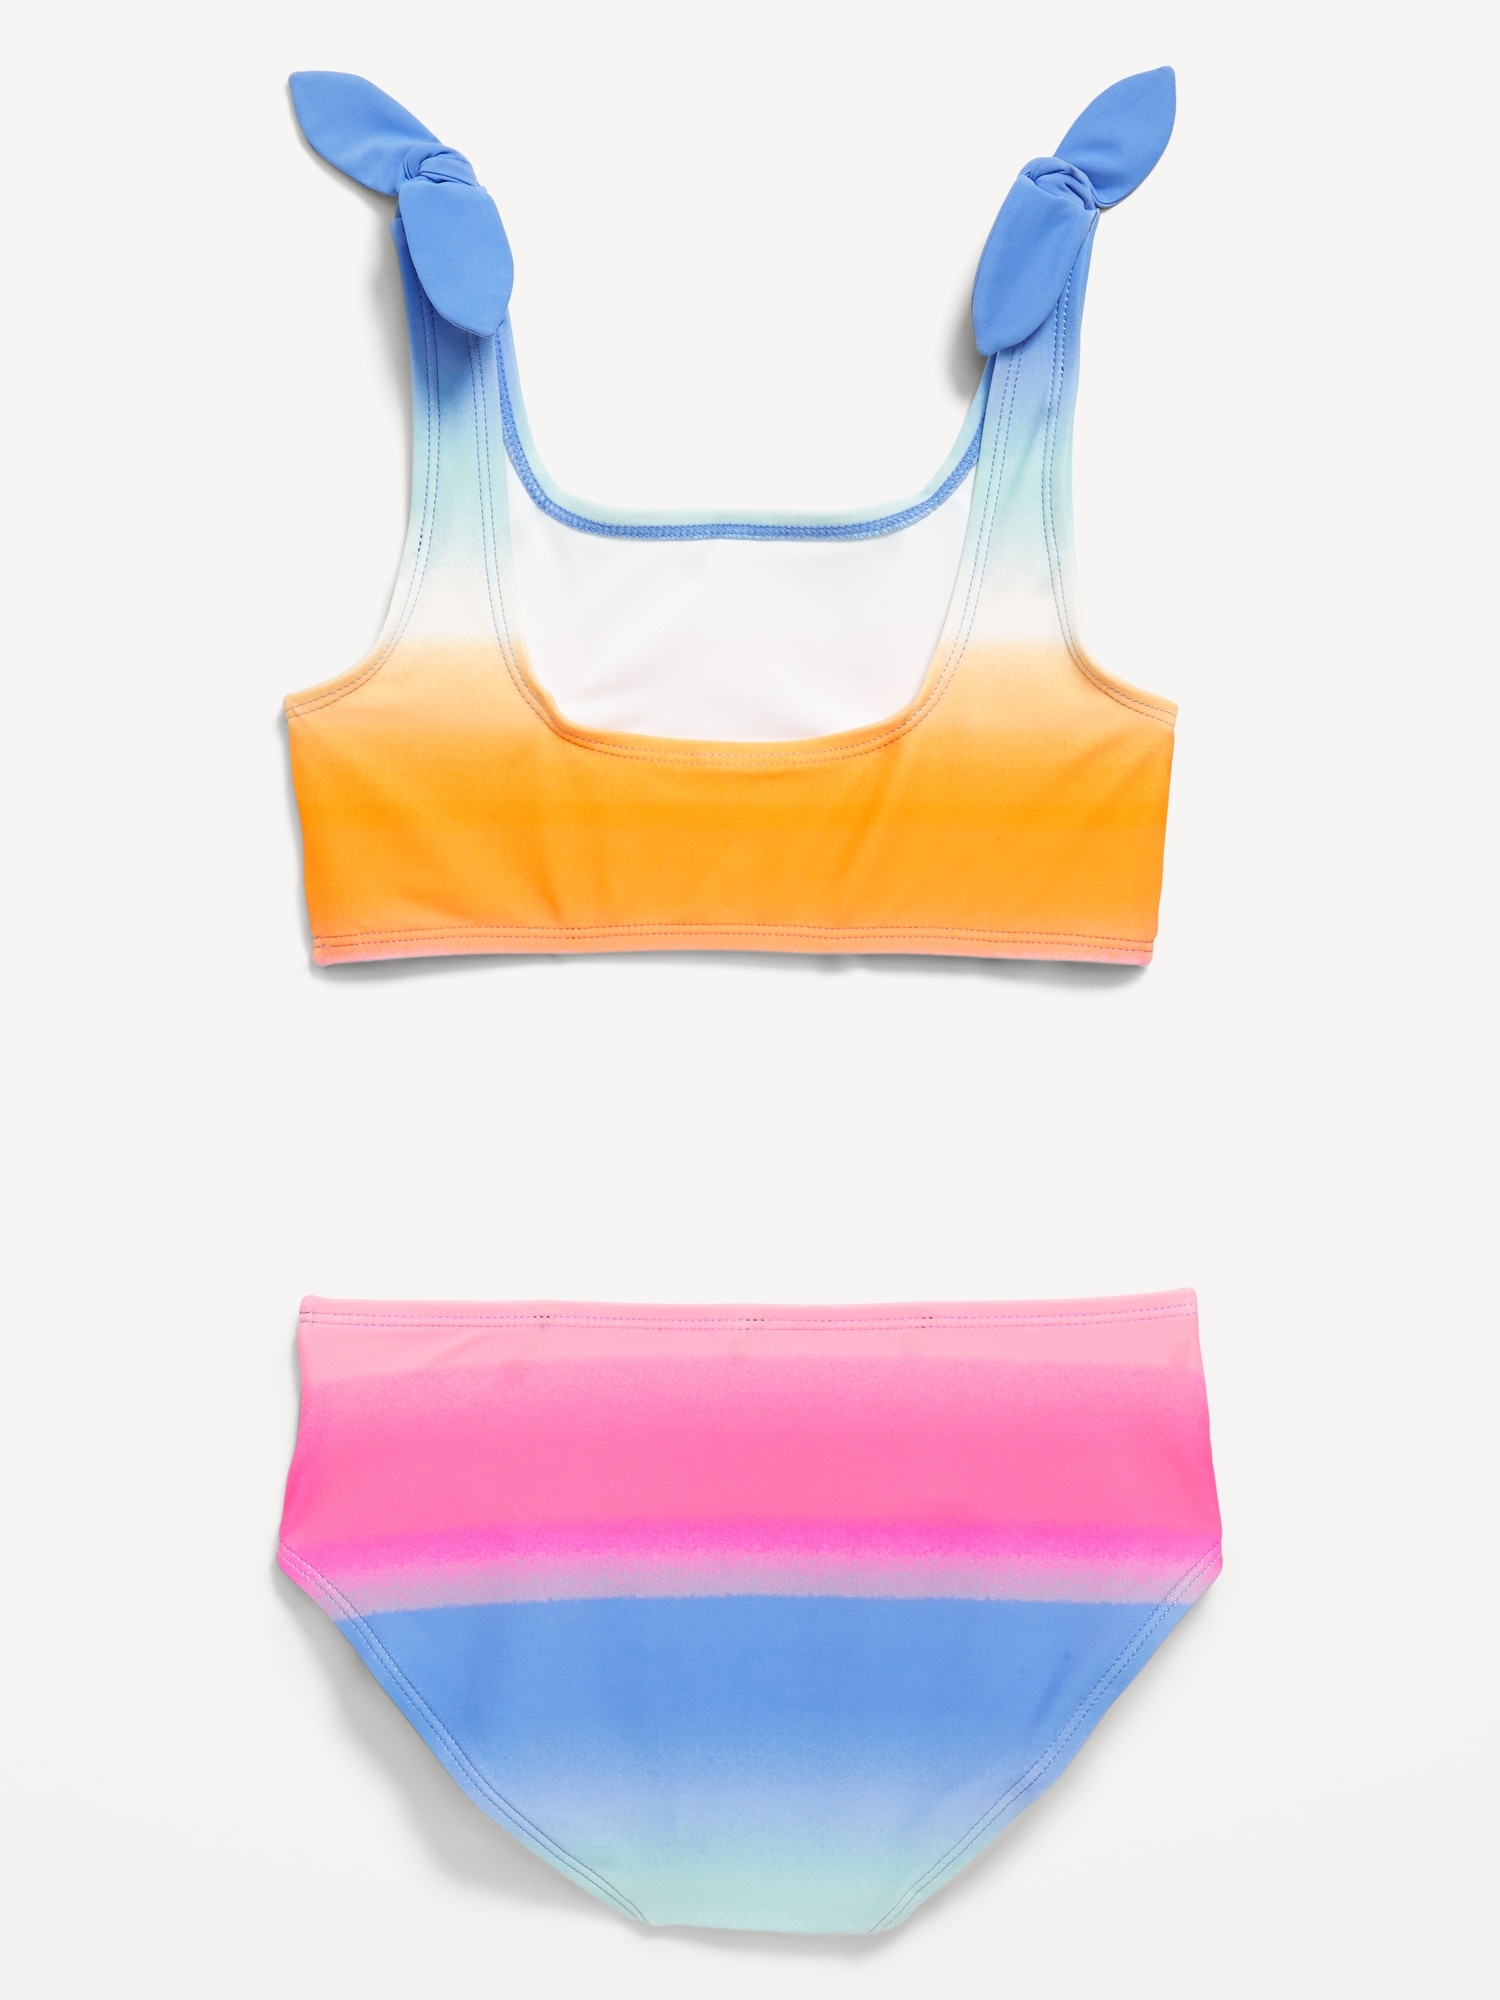 Printed Tie-Knot Bikini Swim Set for Girls